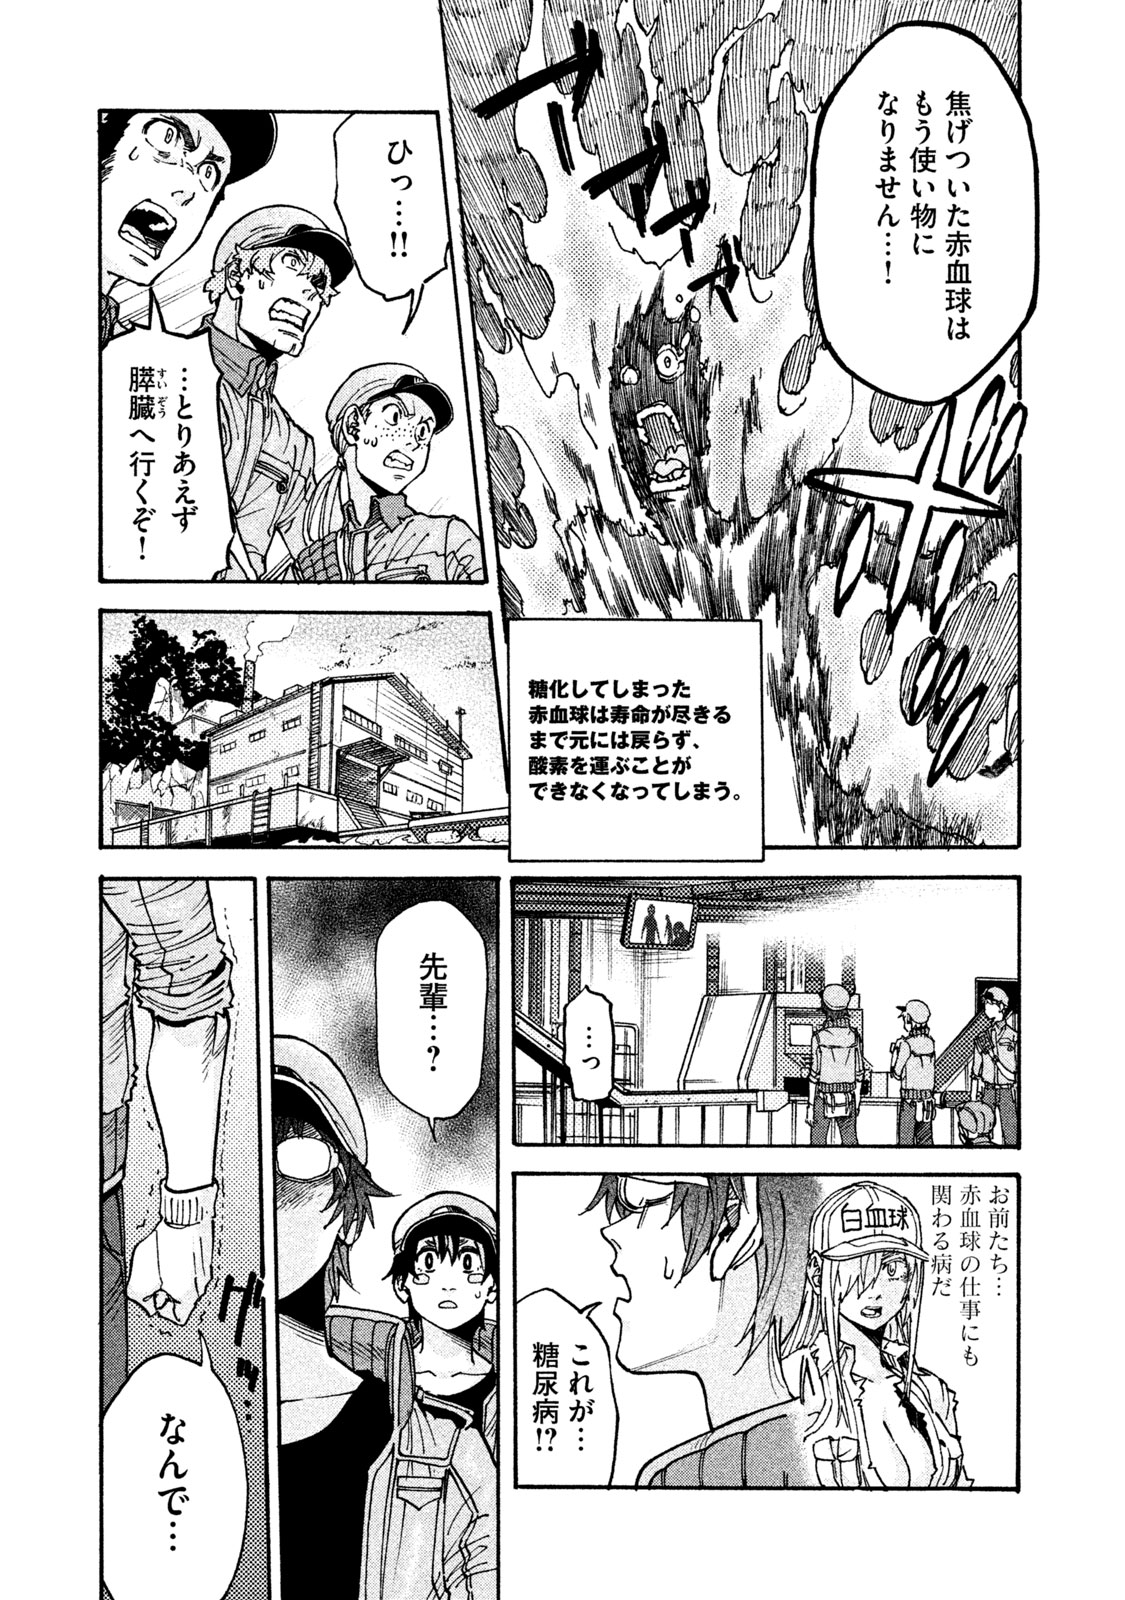 Hataraku Saibou BLACK - Chapter 19 - Page 14